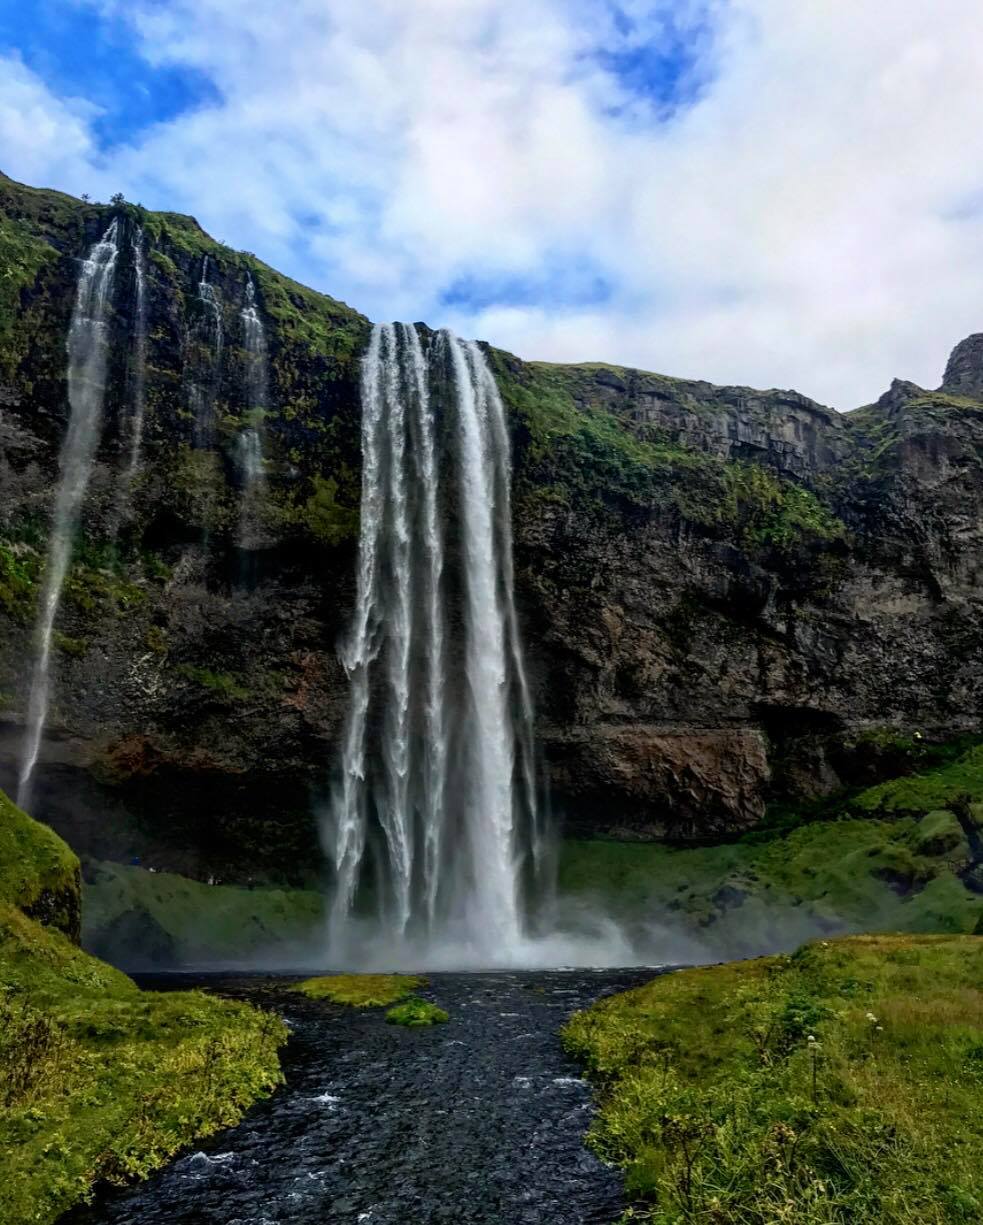 Fueling Wanderlust: 20 Photos to Make You Visit Iceland